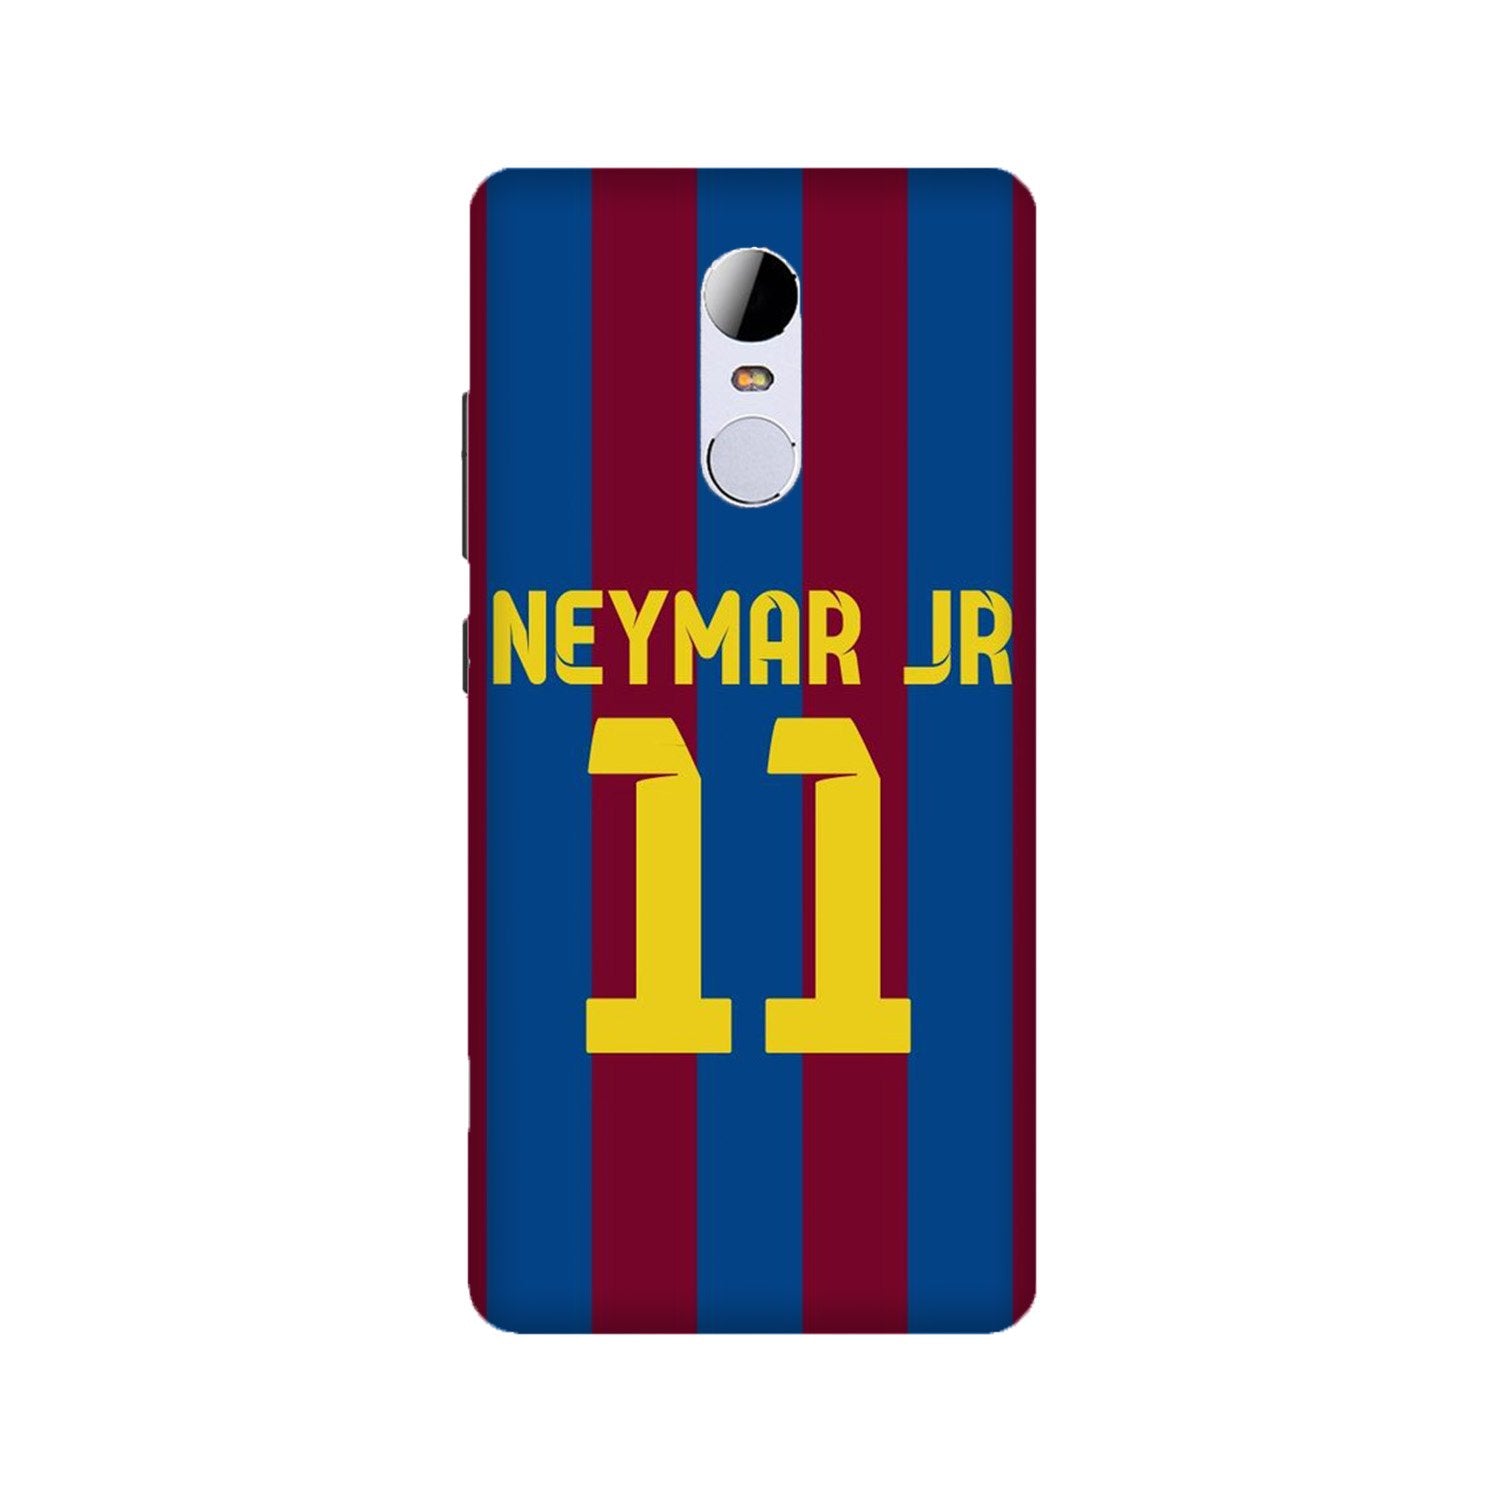 Neymar Jr Case for Redmi 5(Design - 162)